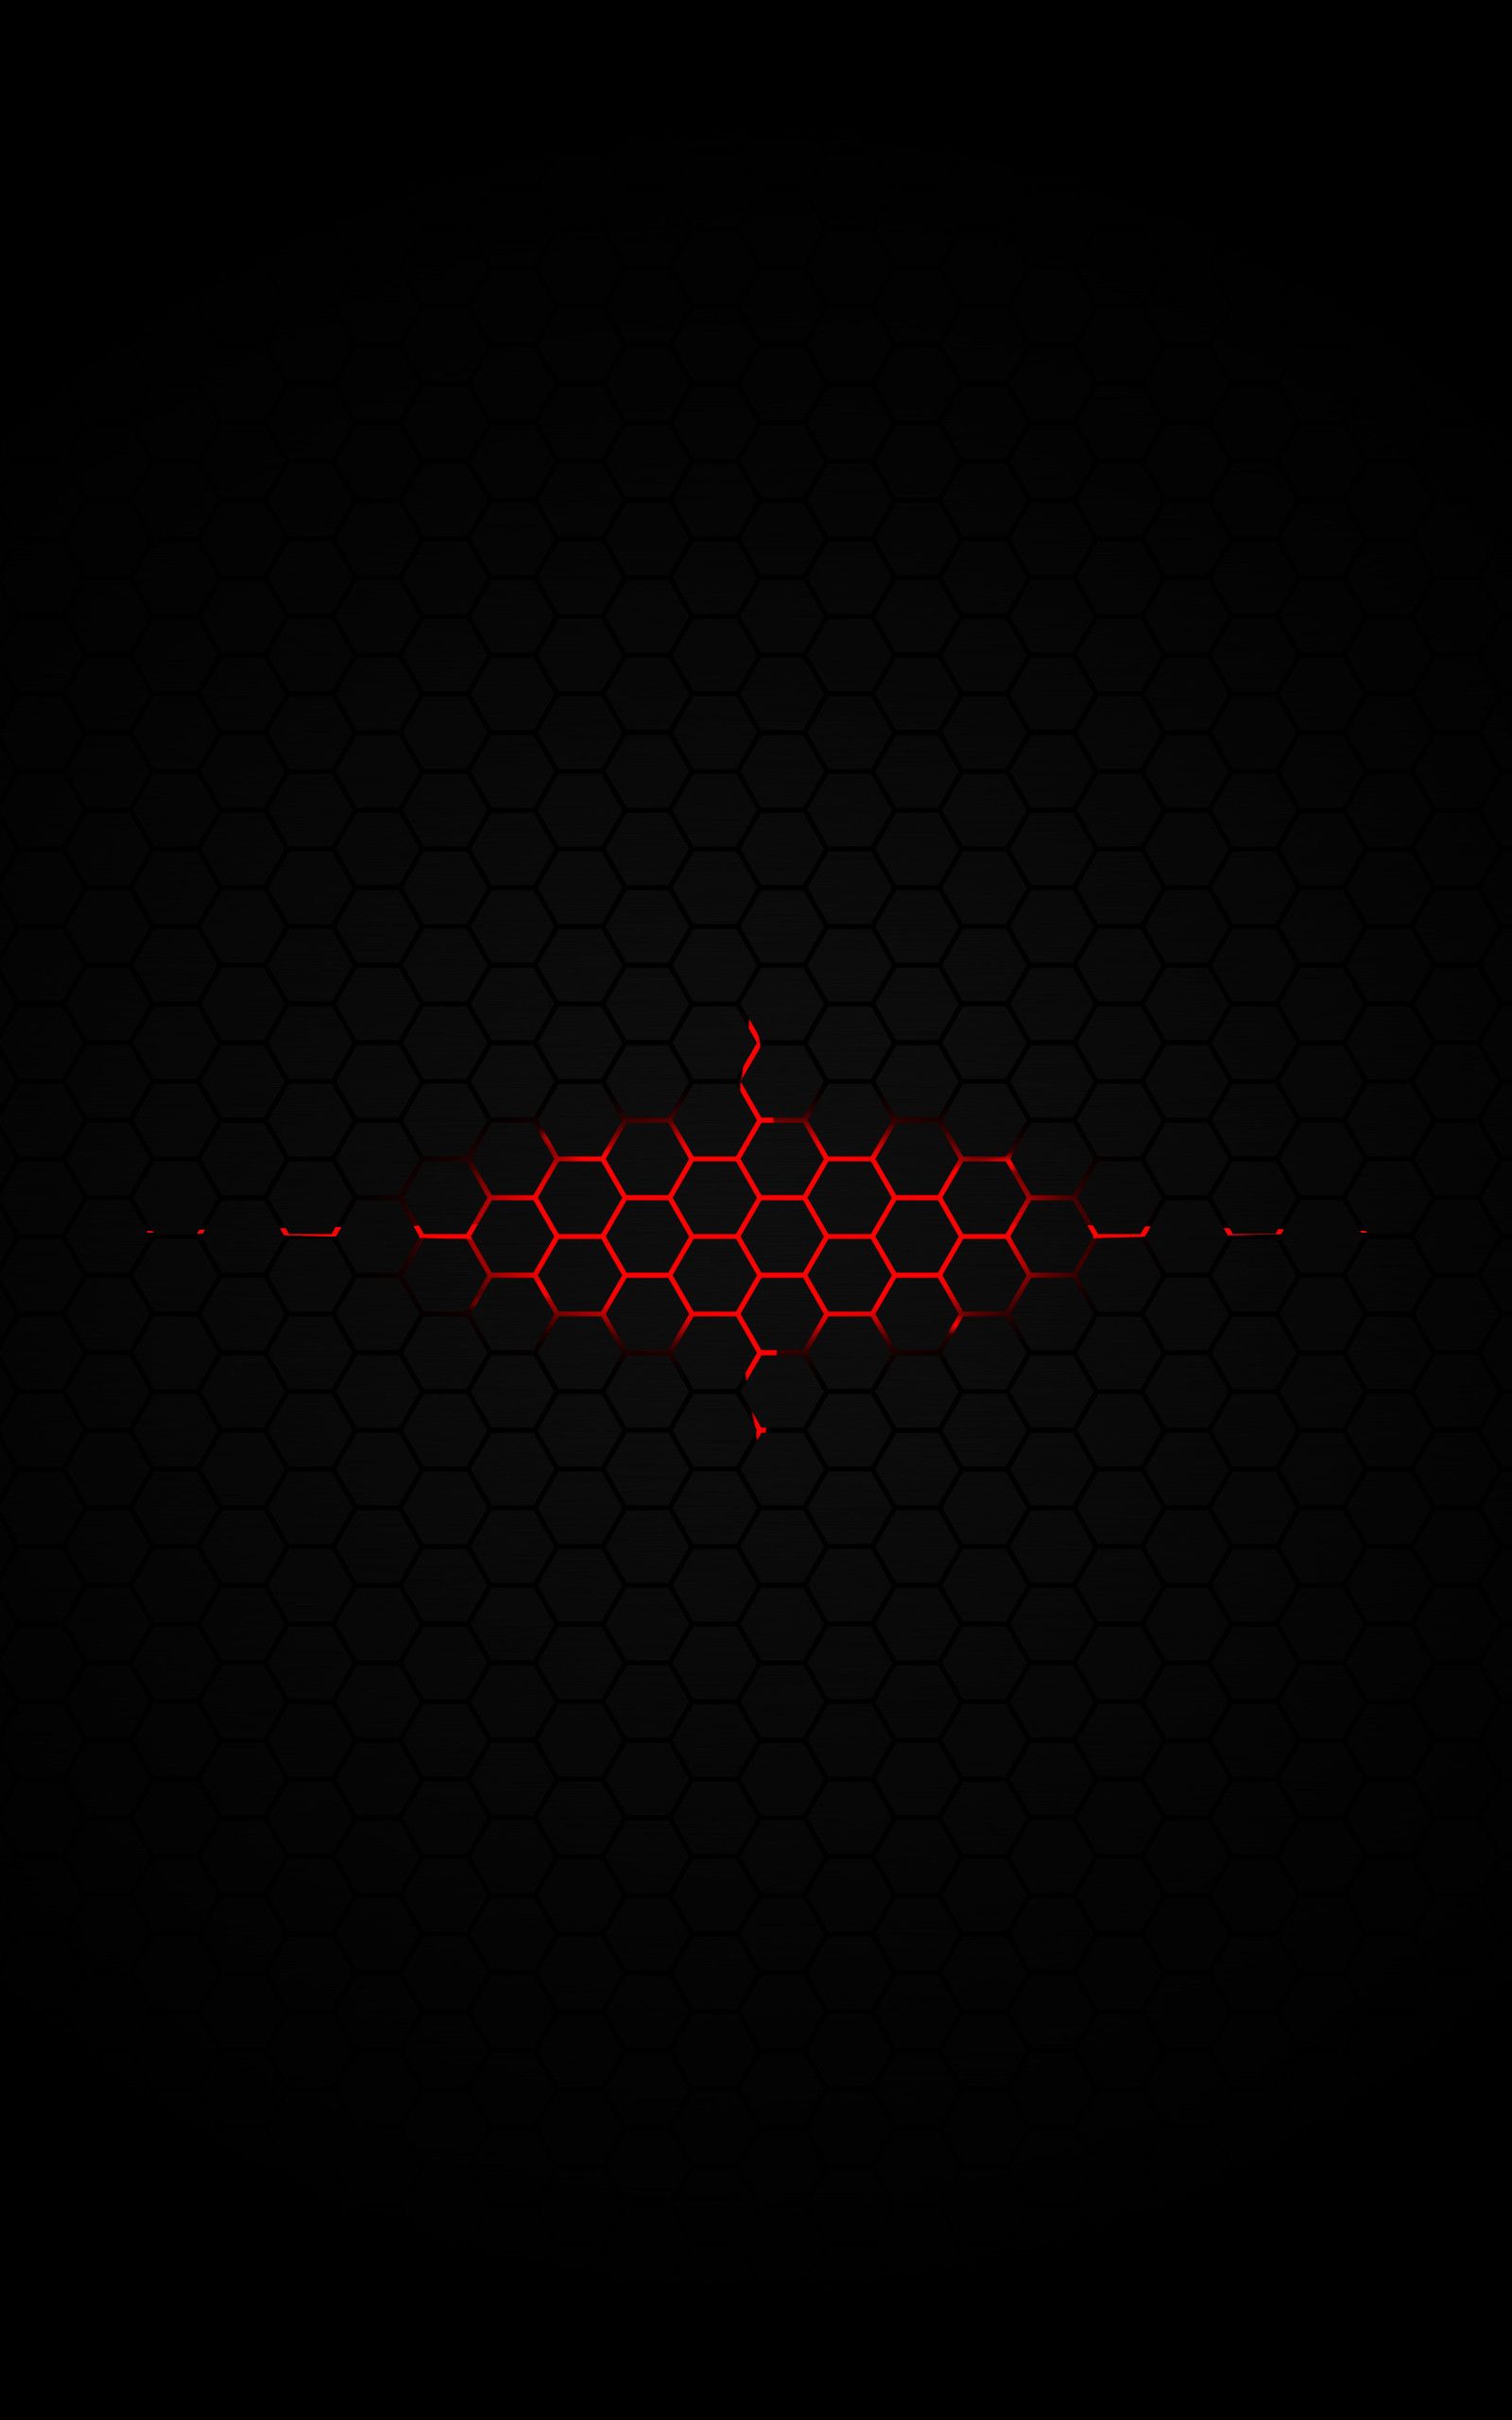 Red Hexagon